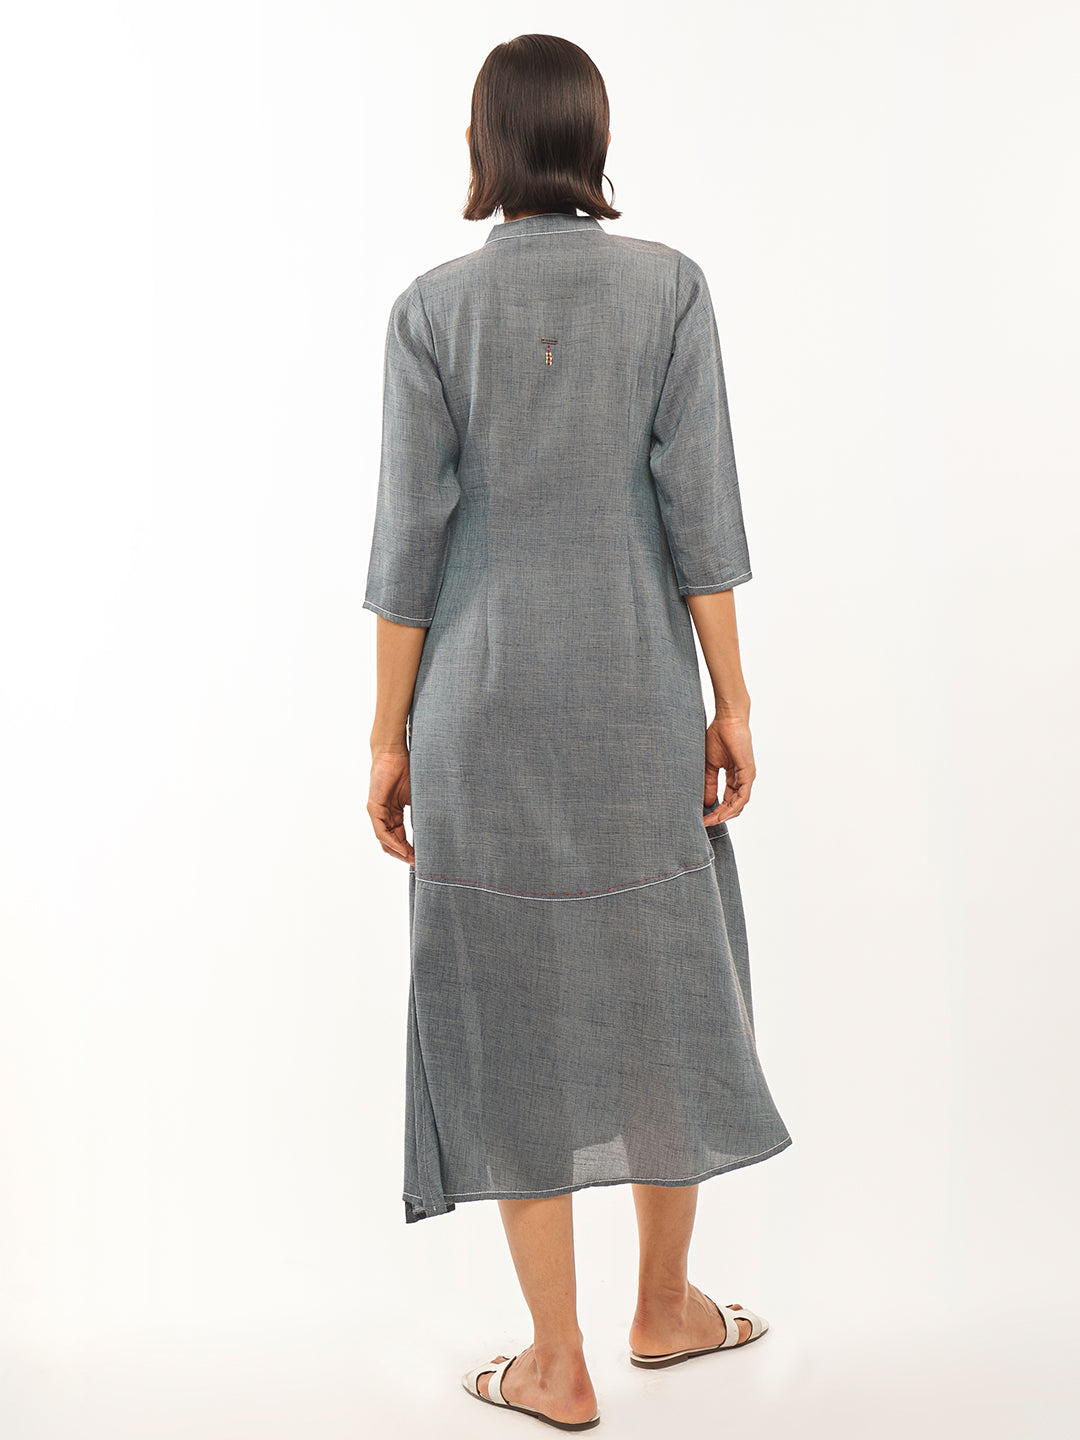 Grey A-Line Side Slit Dress - ARH895